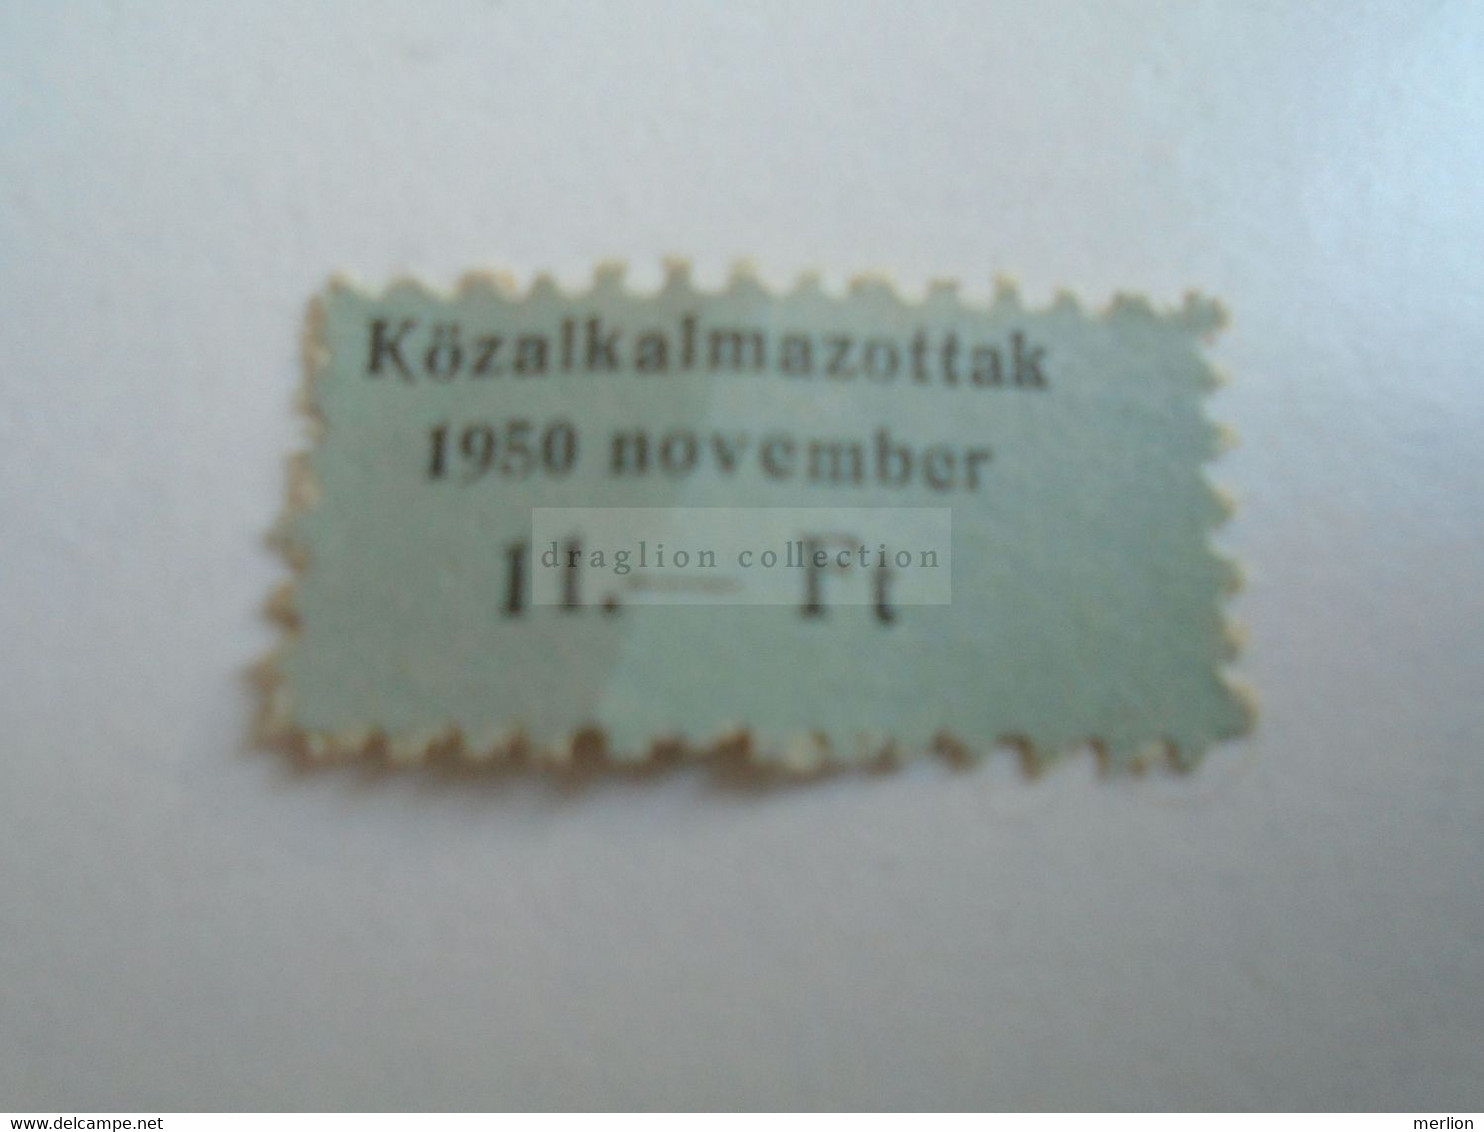 D188110  Hungary Membership Tax Stamp - Civil Servants   Közalkalmazottak    1950 - Fiscale Zegels